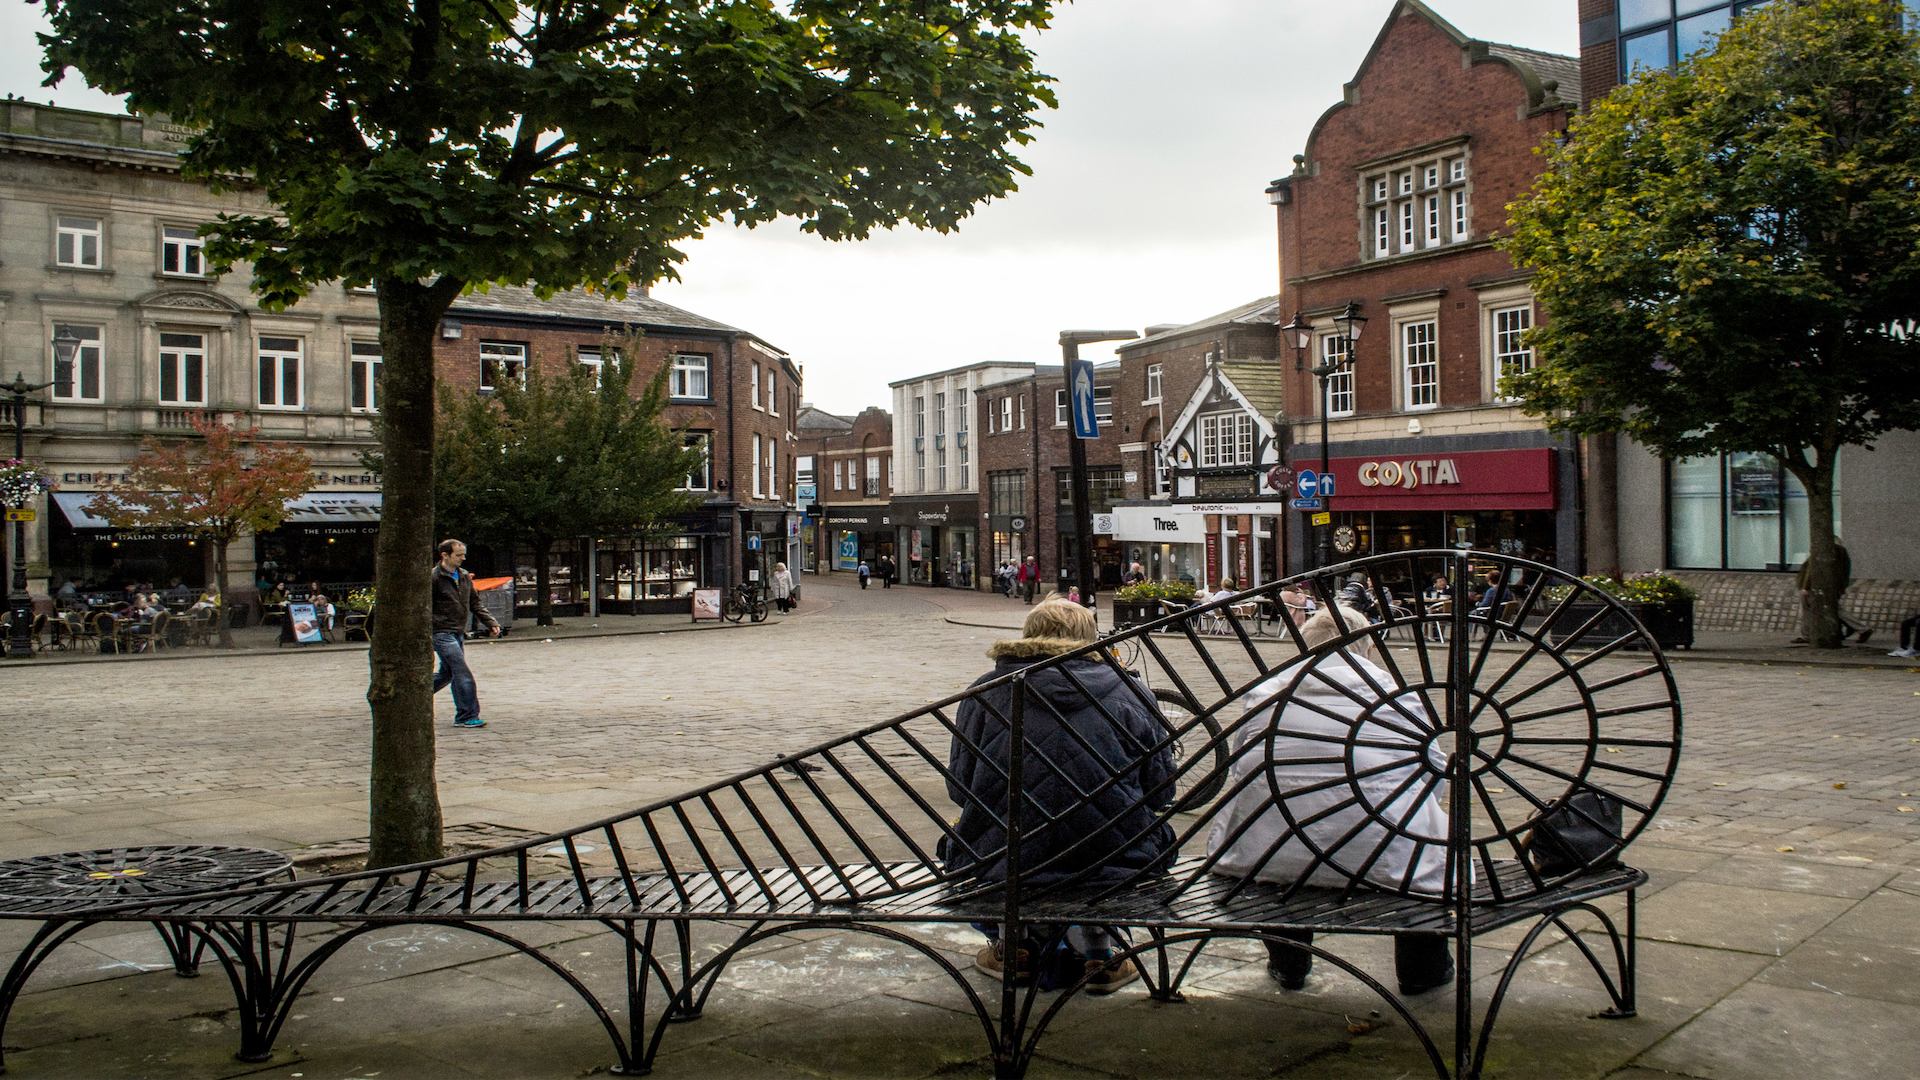 Two women sitting on a bench in Macclesfield